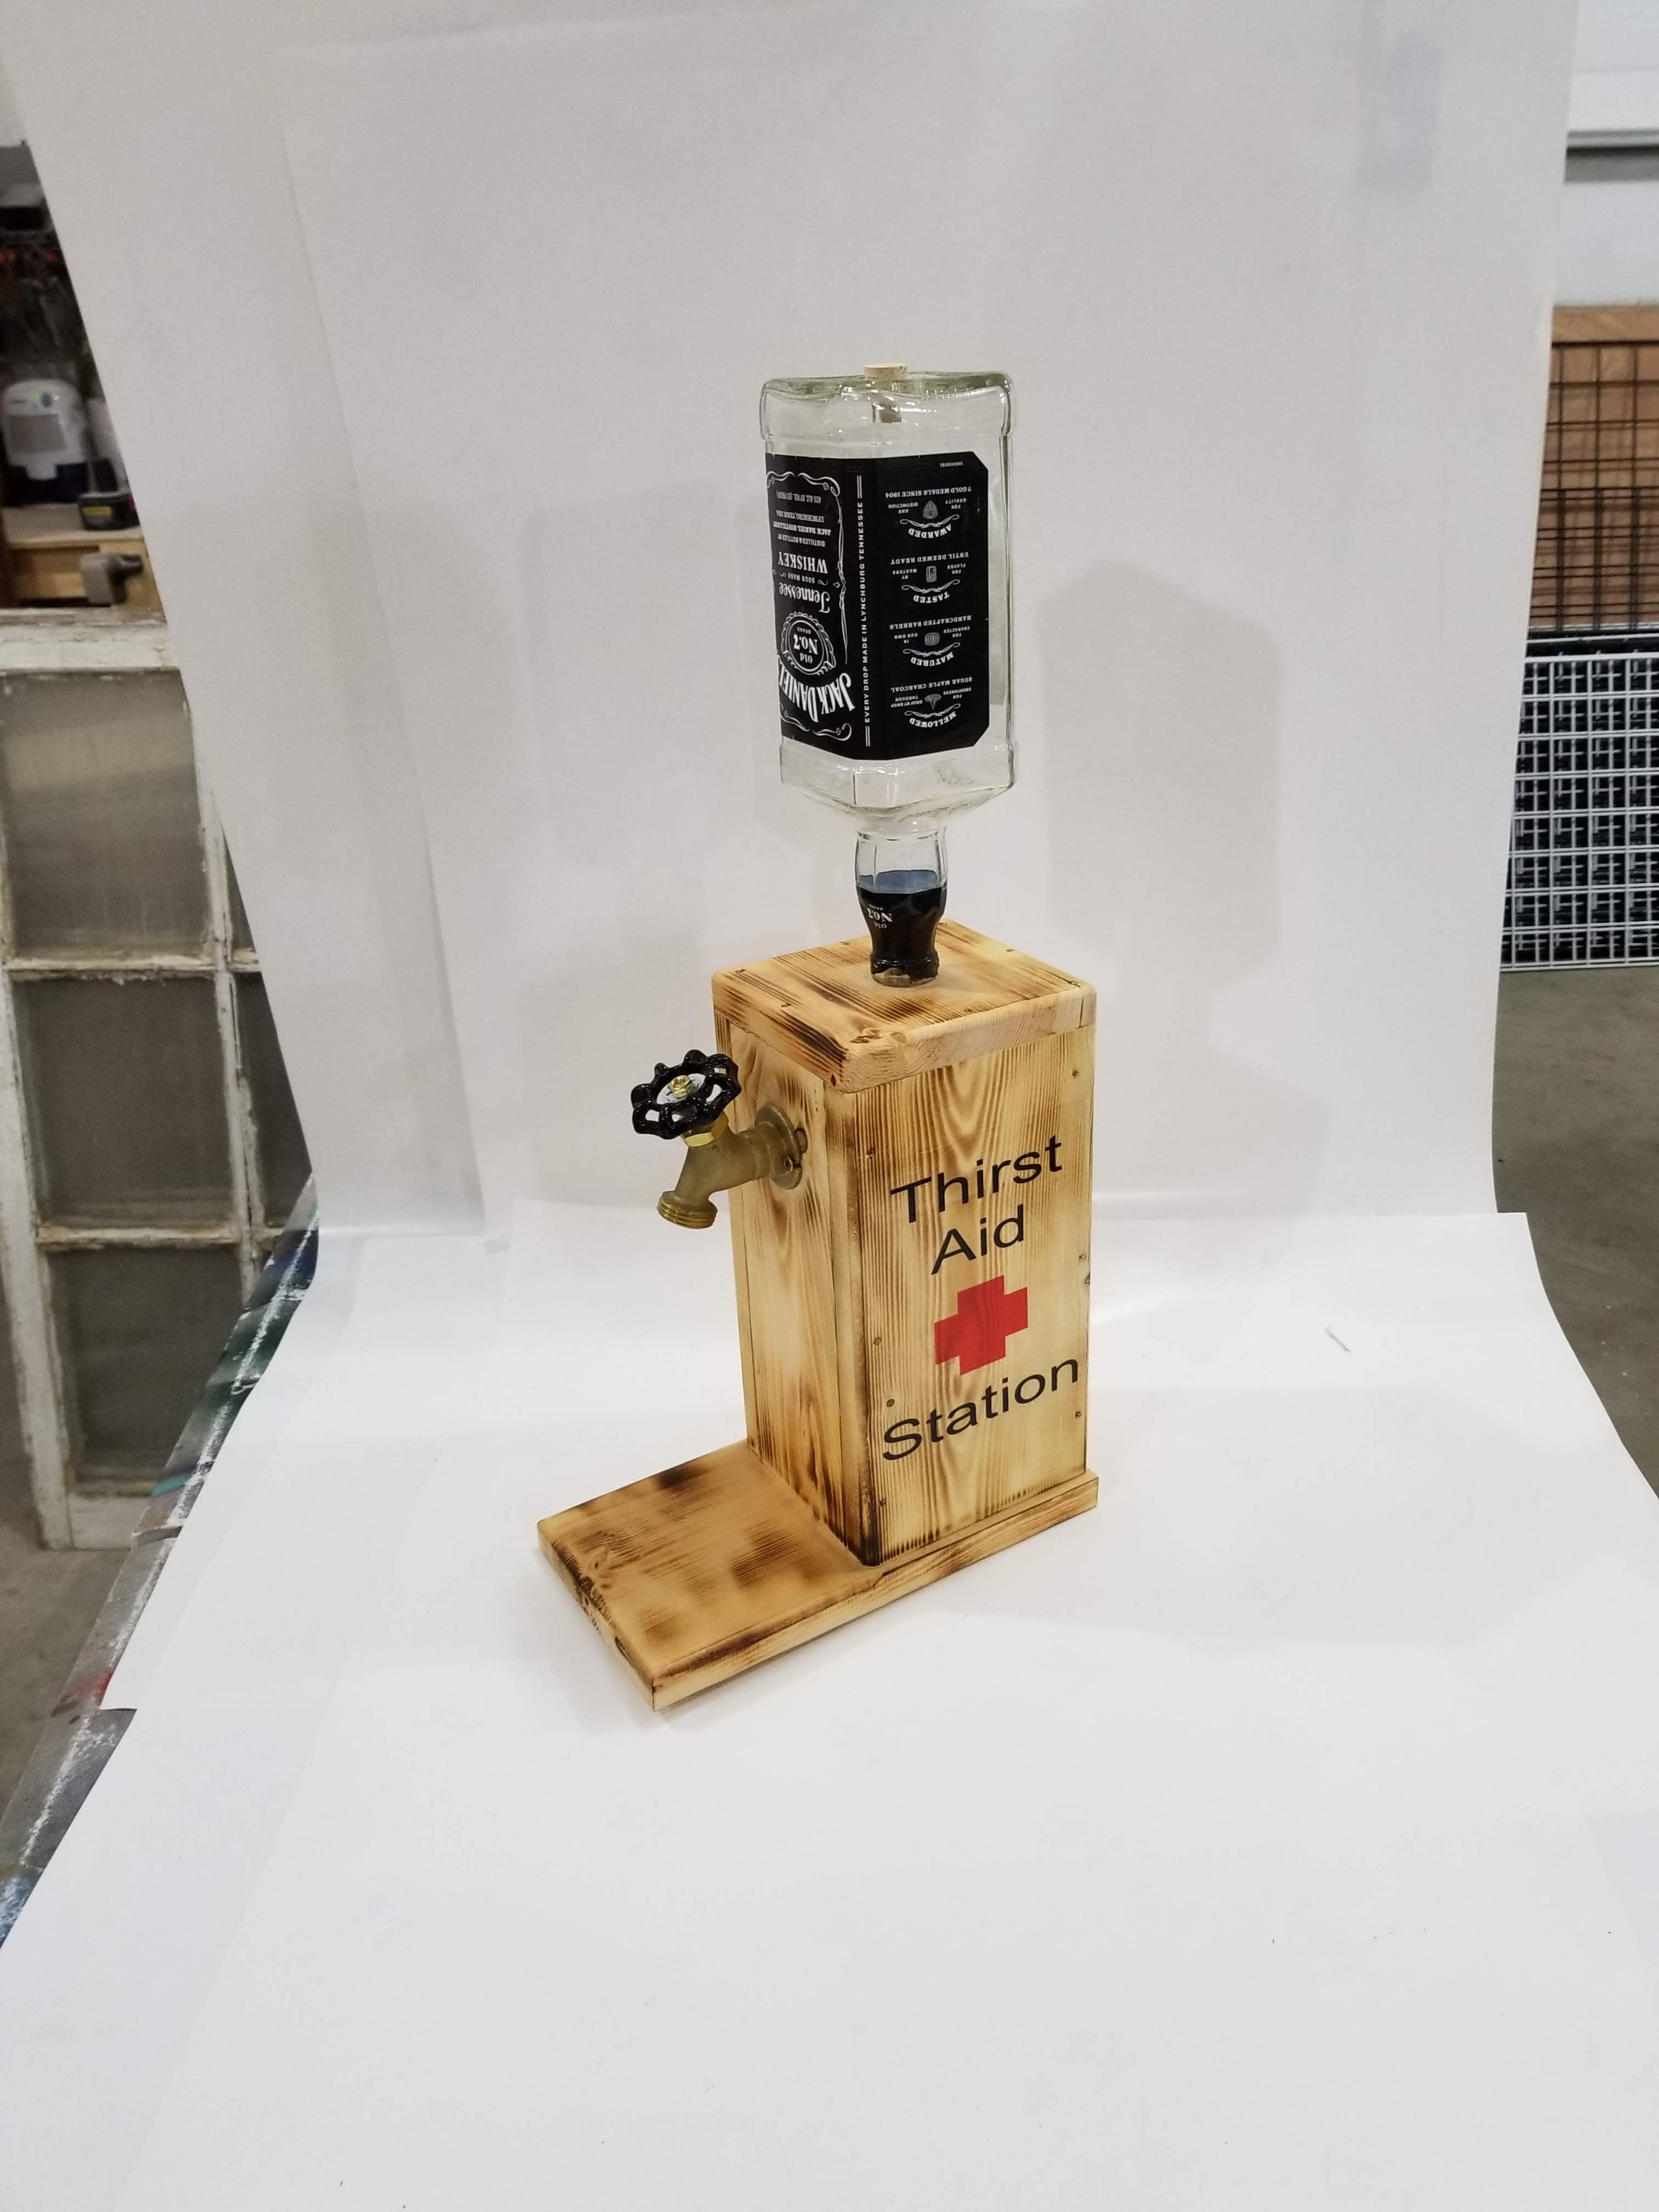 Liquor dispenser Jack Daniels Thirst Aid Station